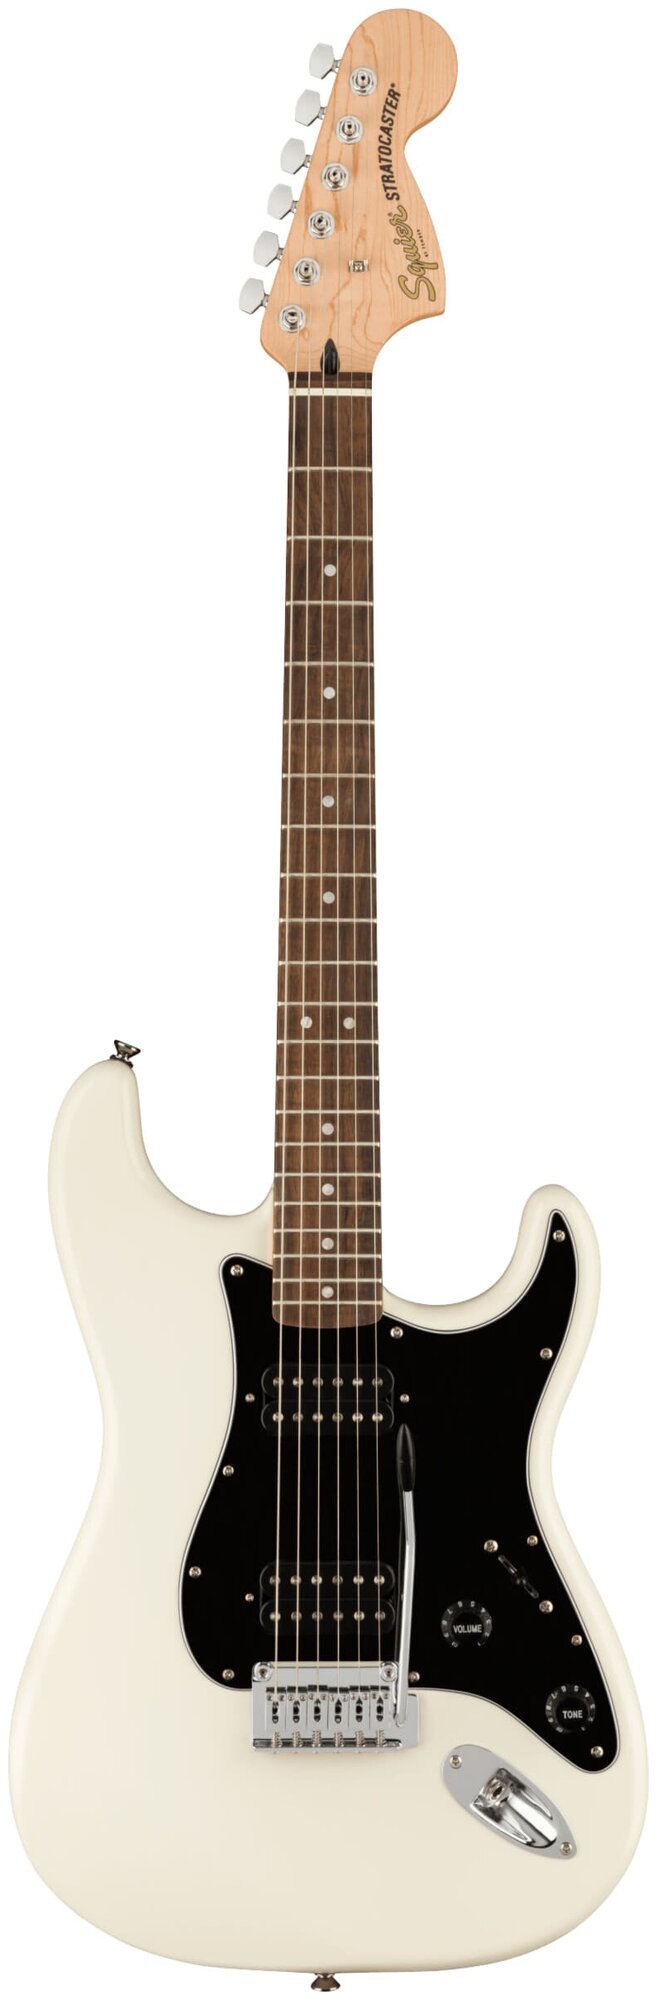 FENDER (C) SQUIER Affinity Stratocaster HH LRL OLW электрогитара, цвет белый